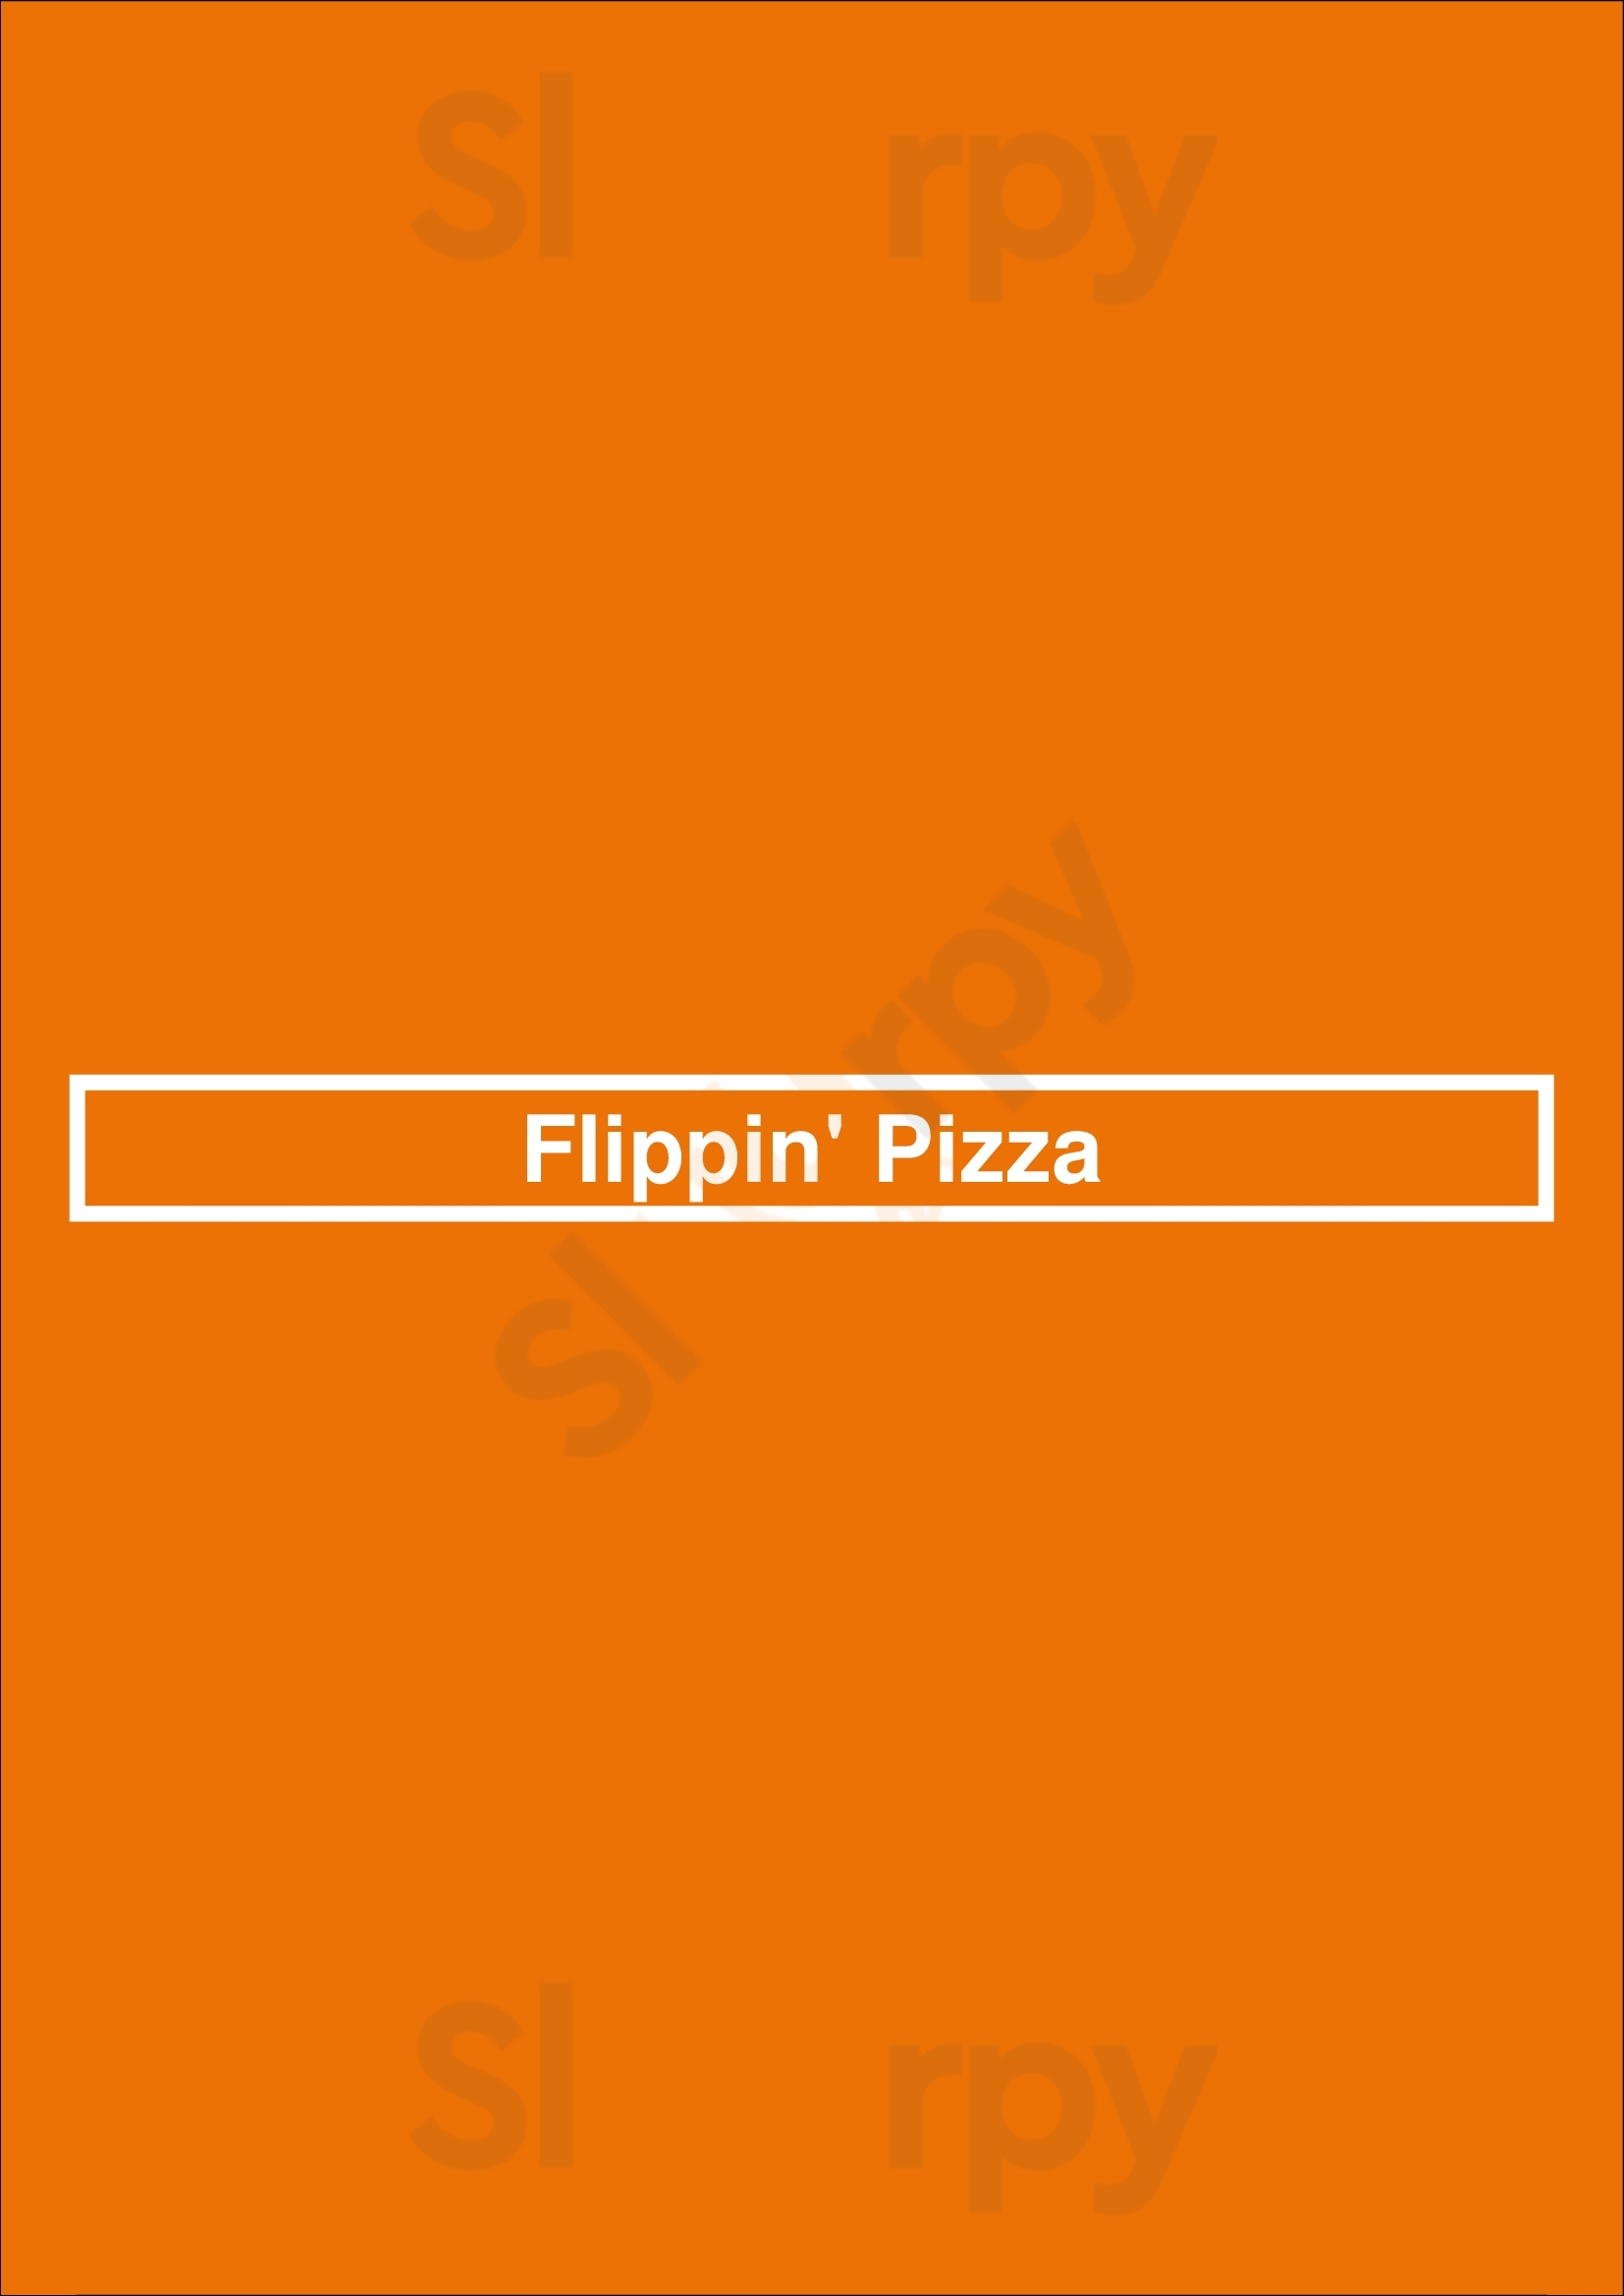 Flippin' Pizza Long Beach Menu - 1